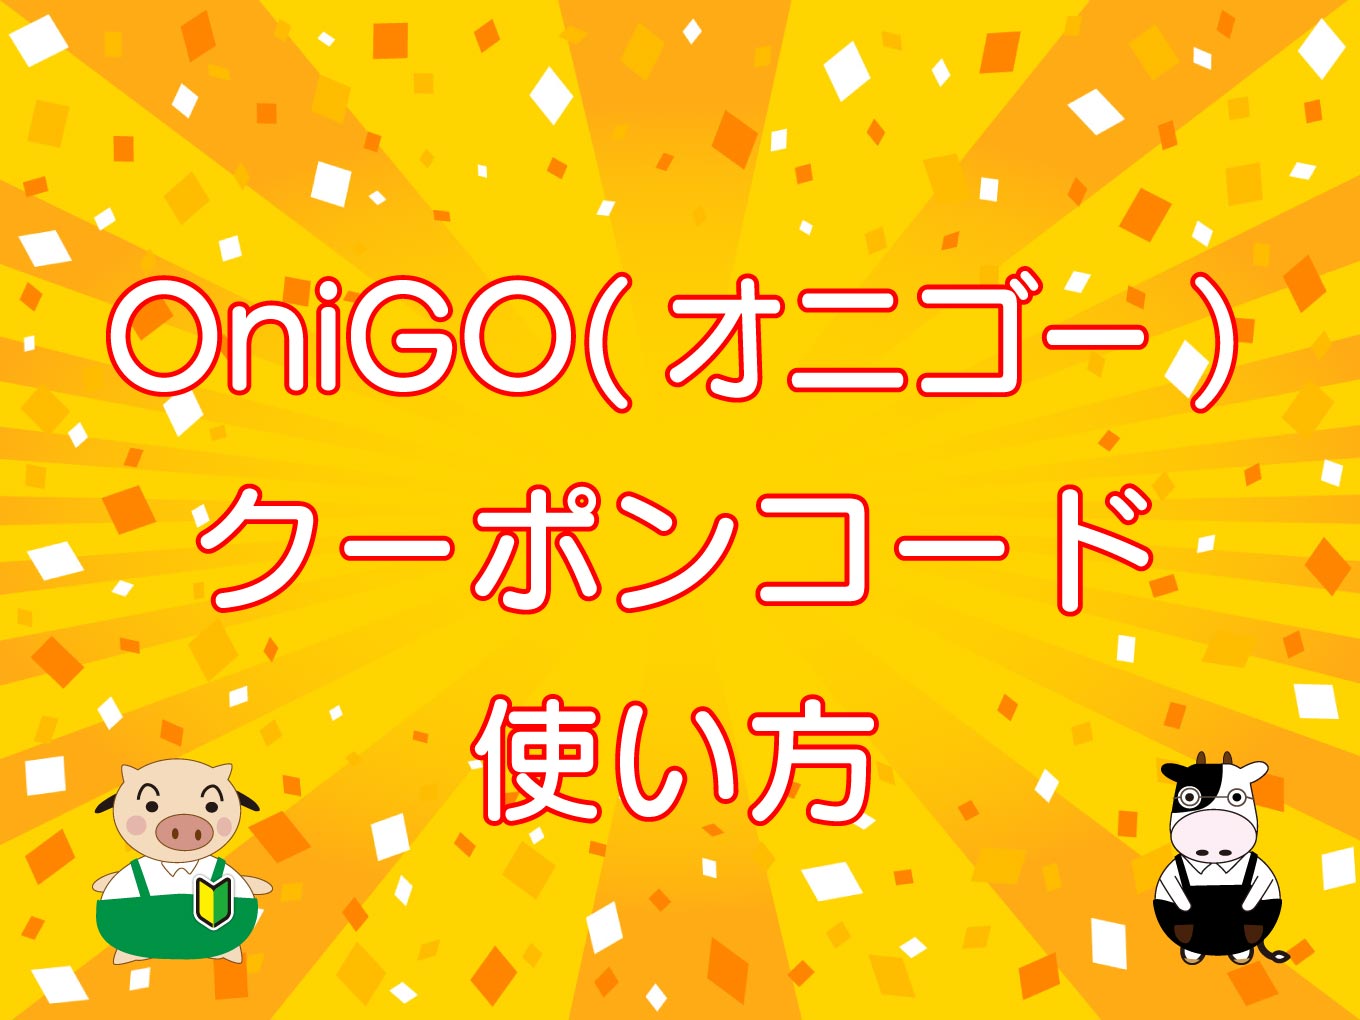 Onigo coupon top